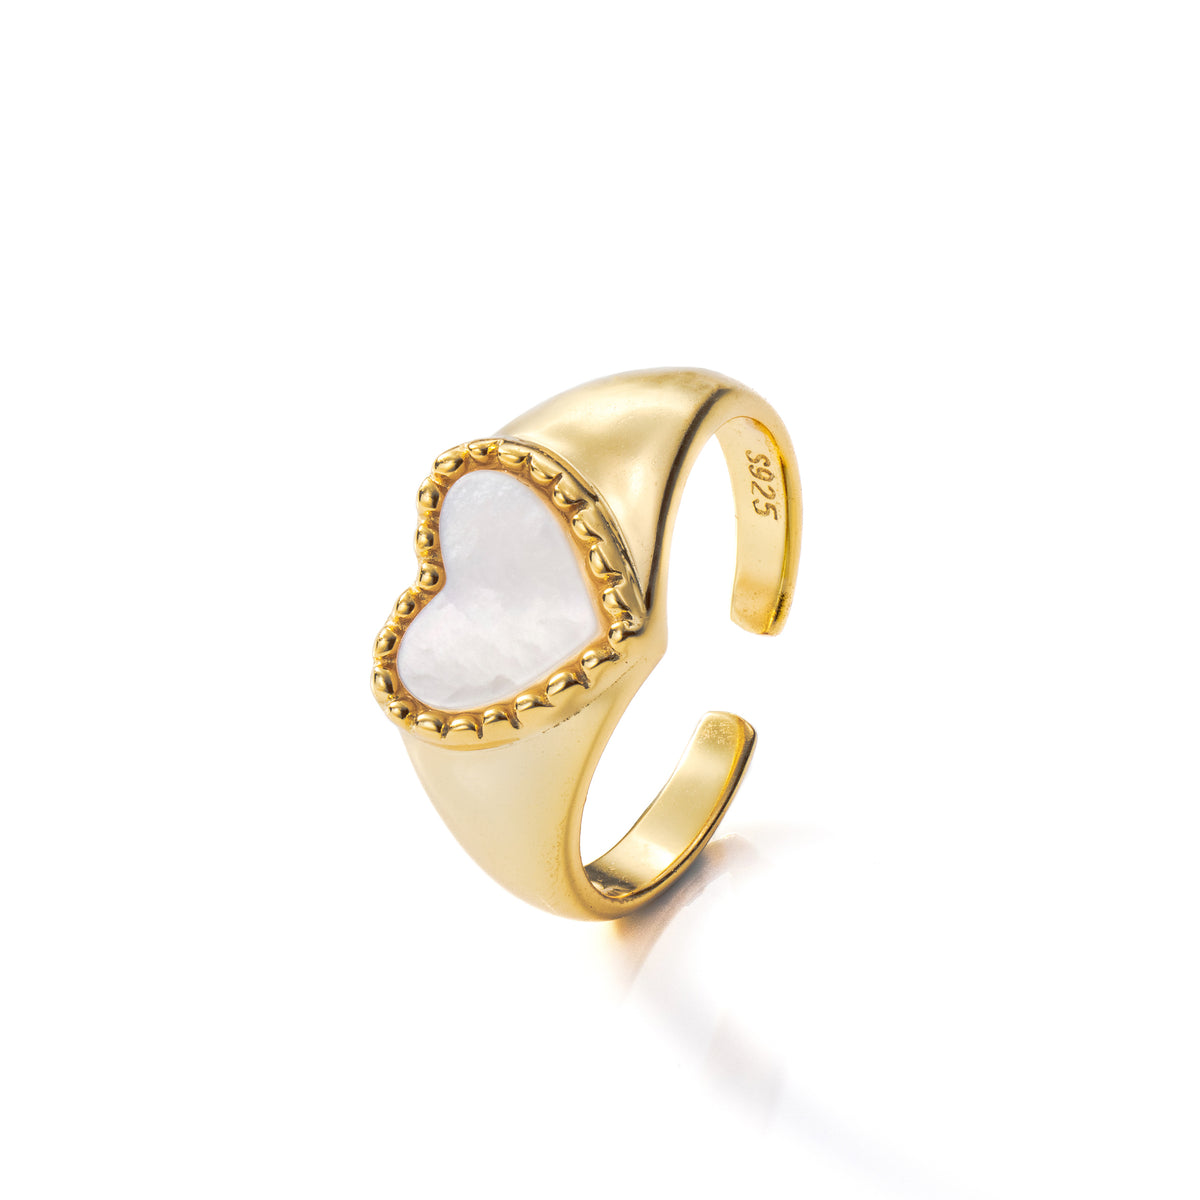 Aspen gold plated Ring, Maison Stephanie